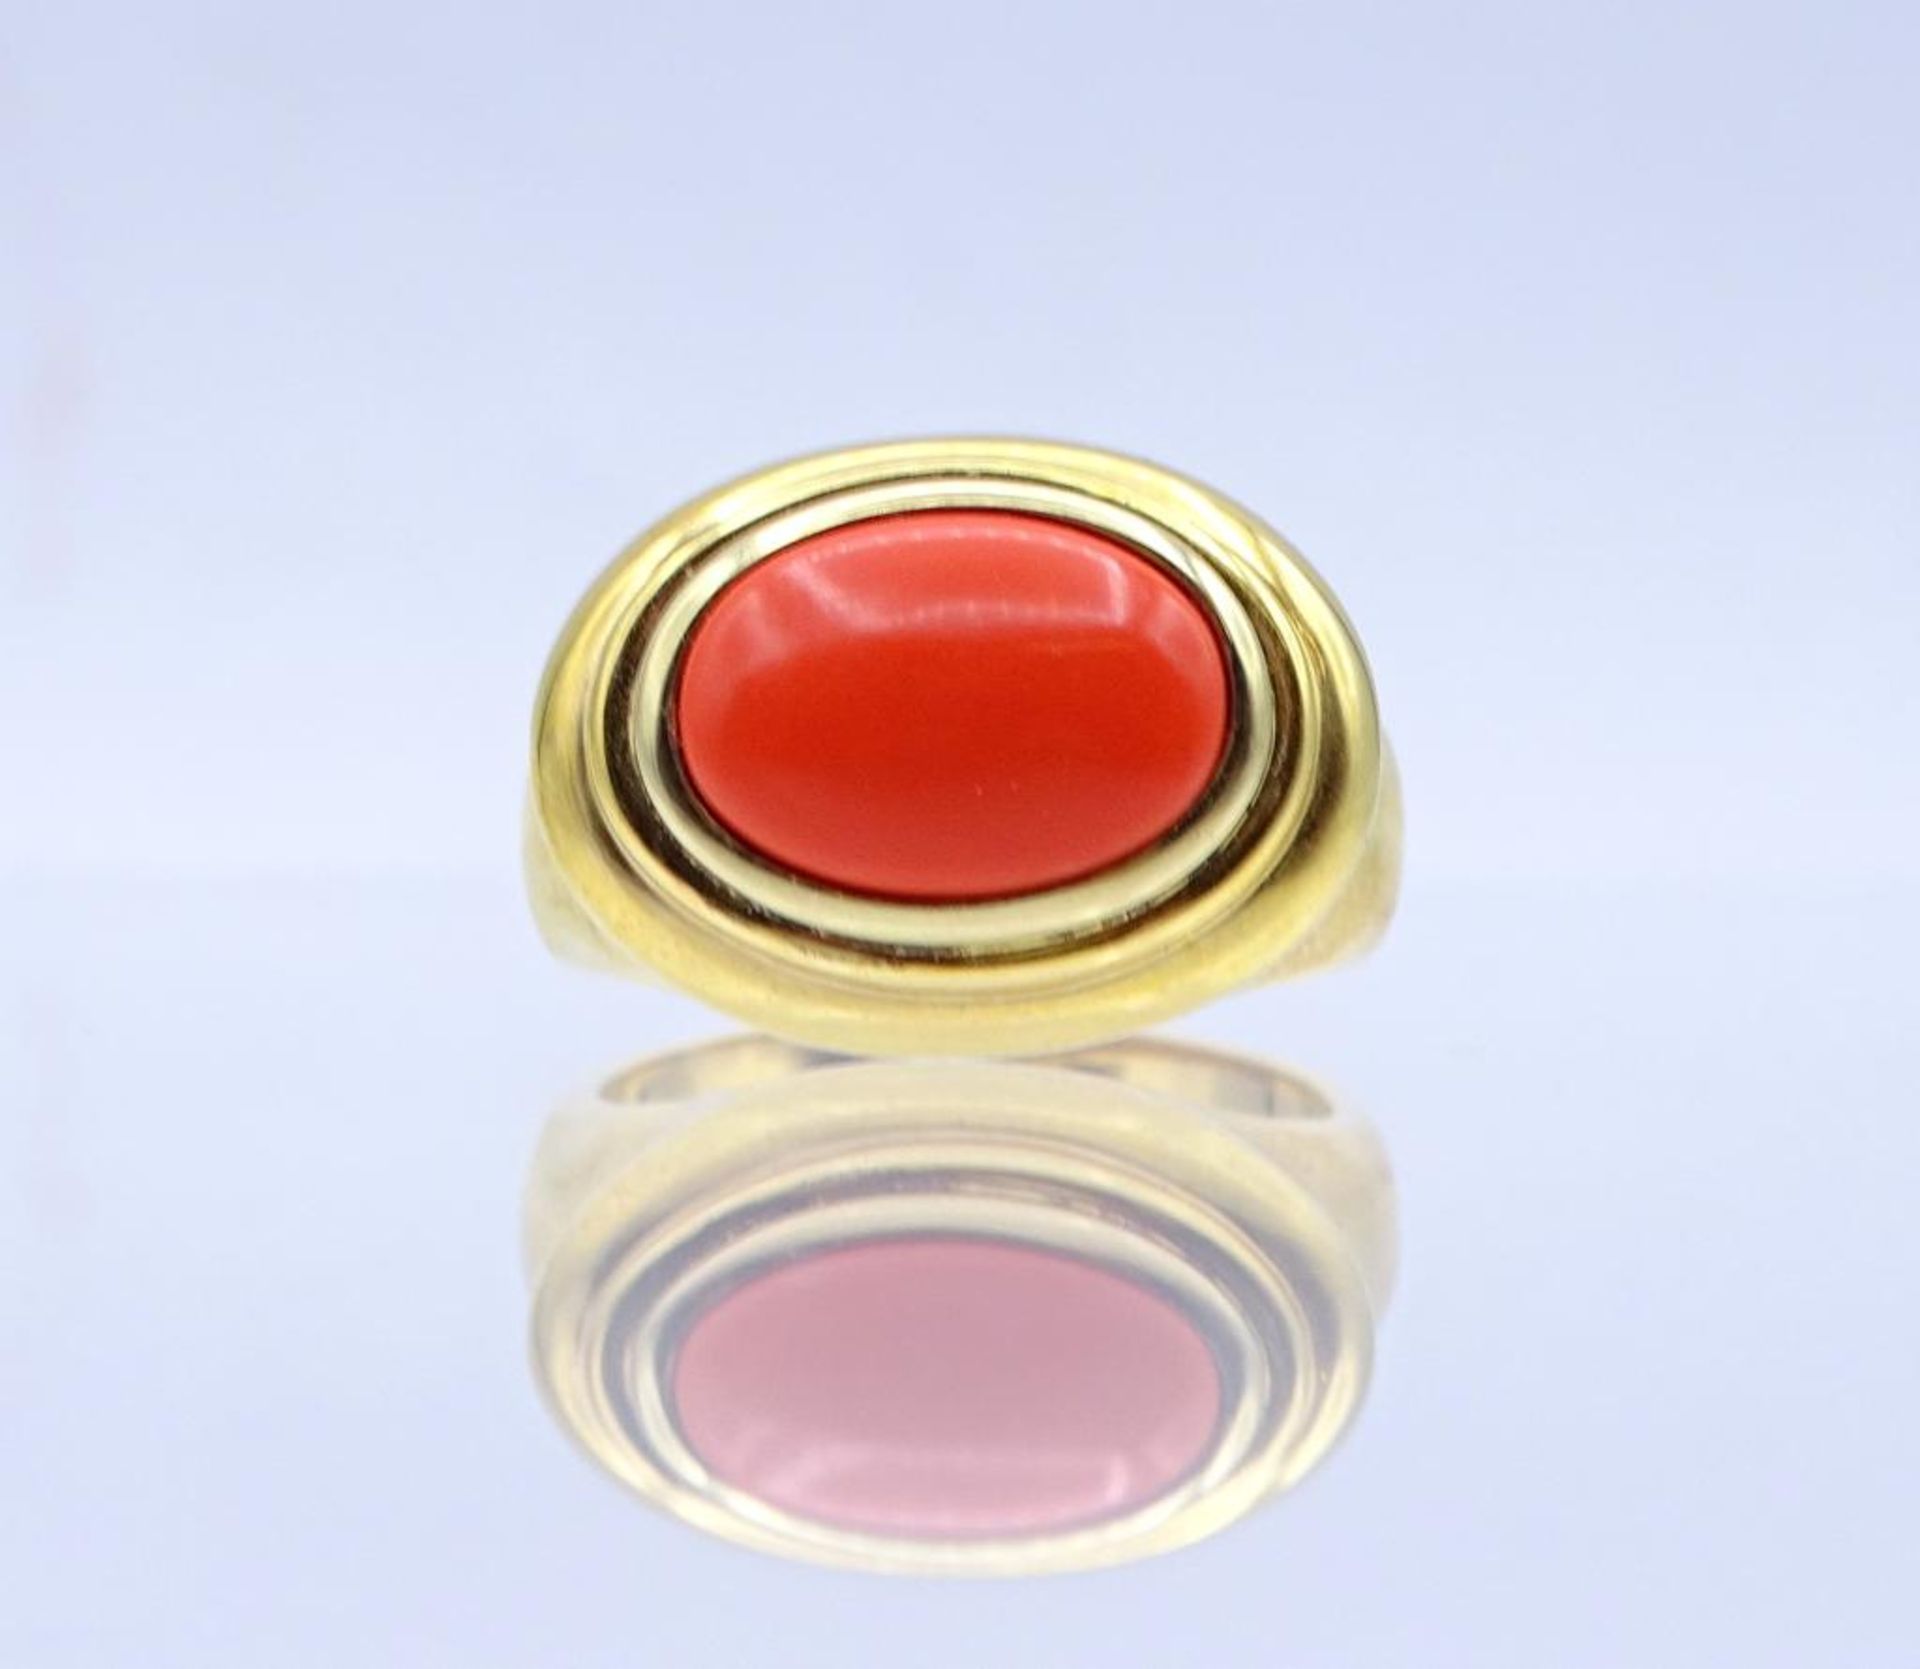 Farbstein-Silber-Ring,vergoldet,Silber 925/000, 8,8gr., RG 60- - -22.61 % buyer's premium on the